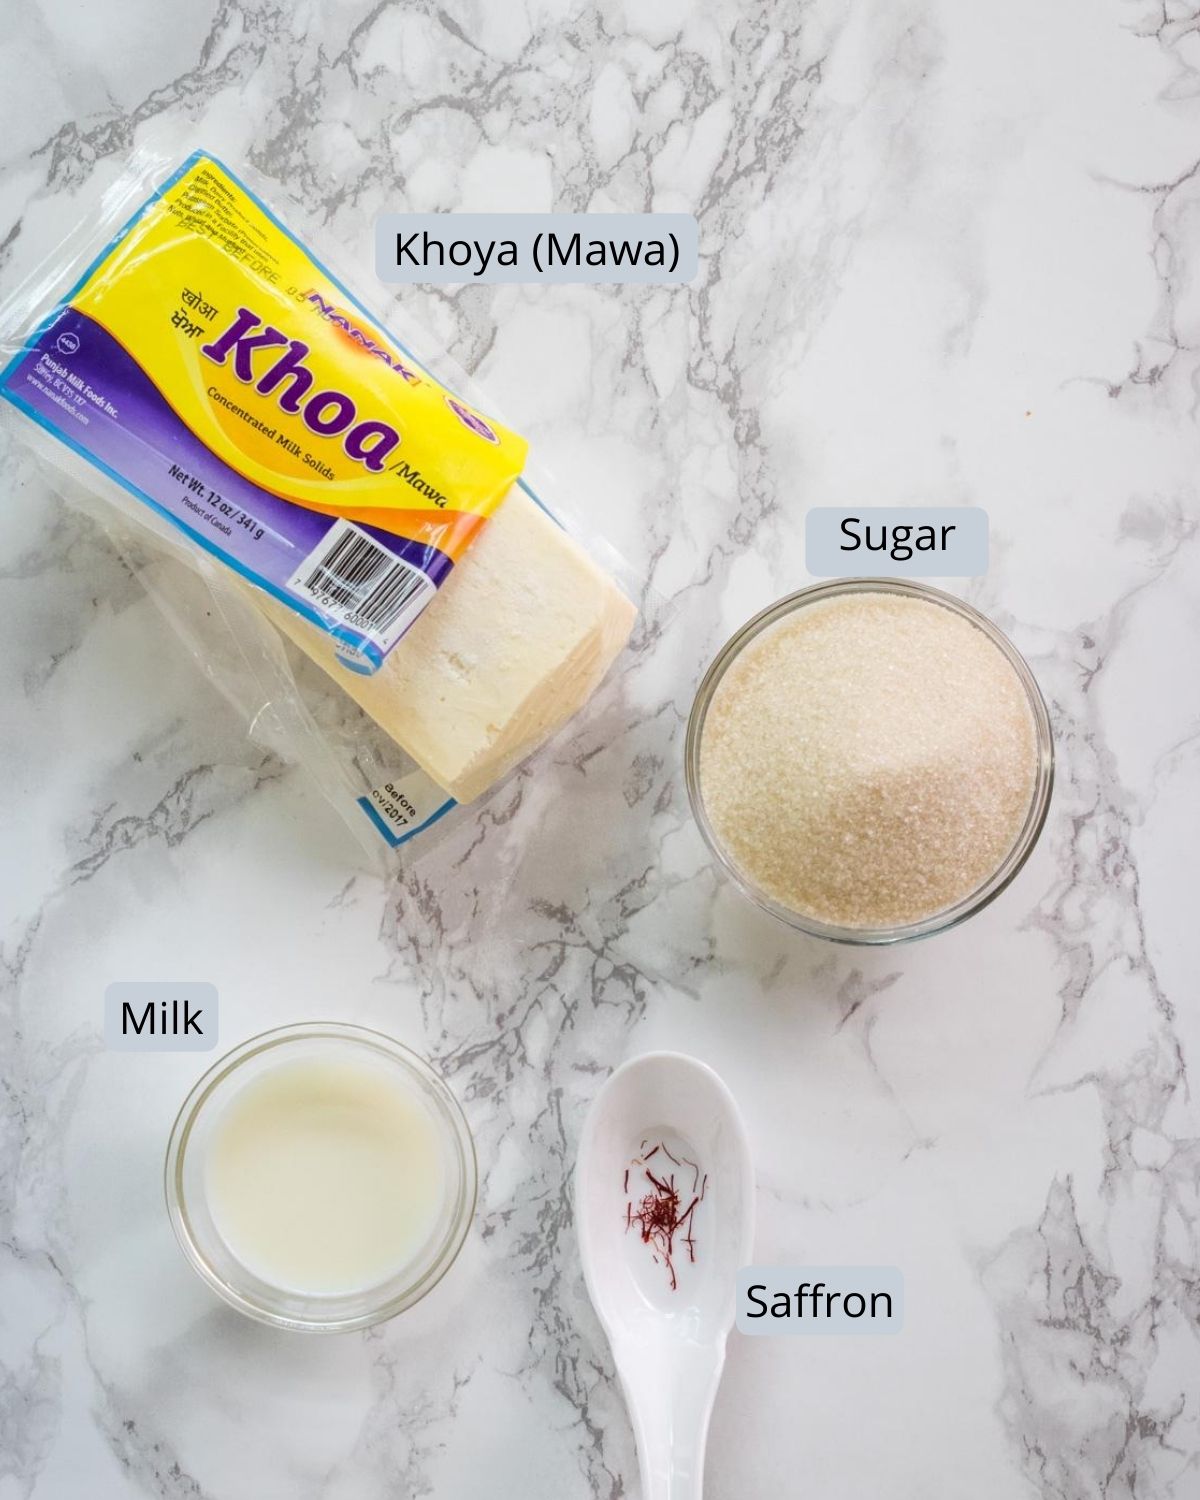 image of ingredients used in modak peda. Shows khoya, sugar, milk, saffron